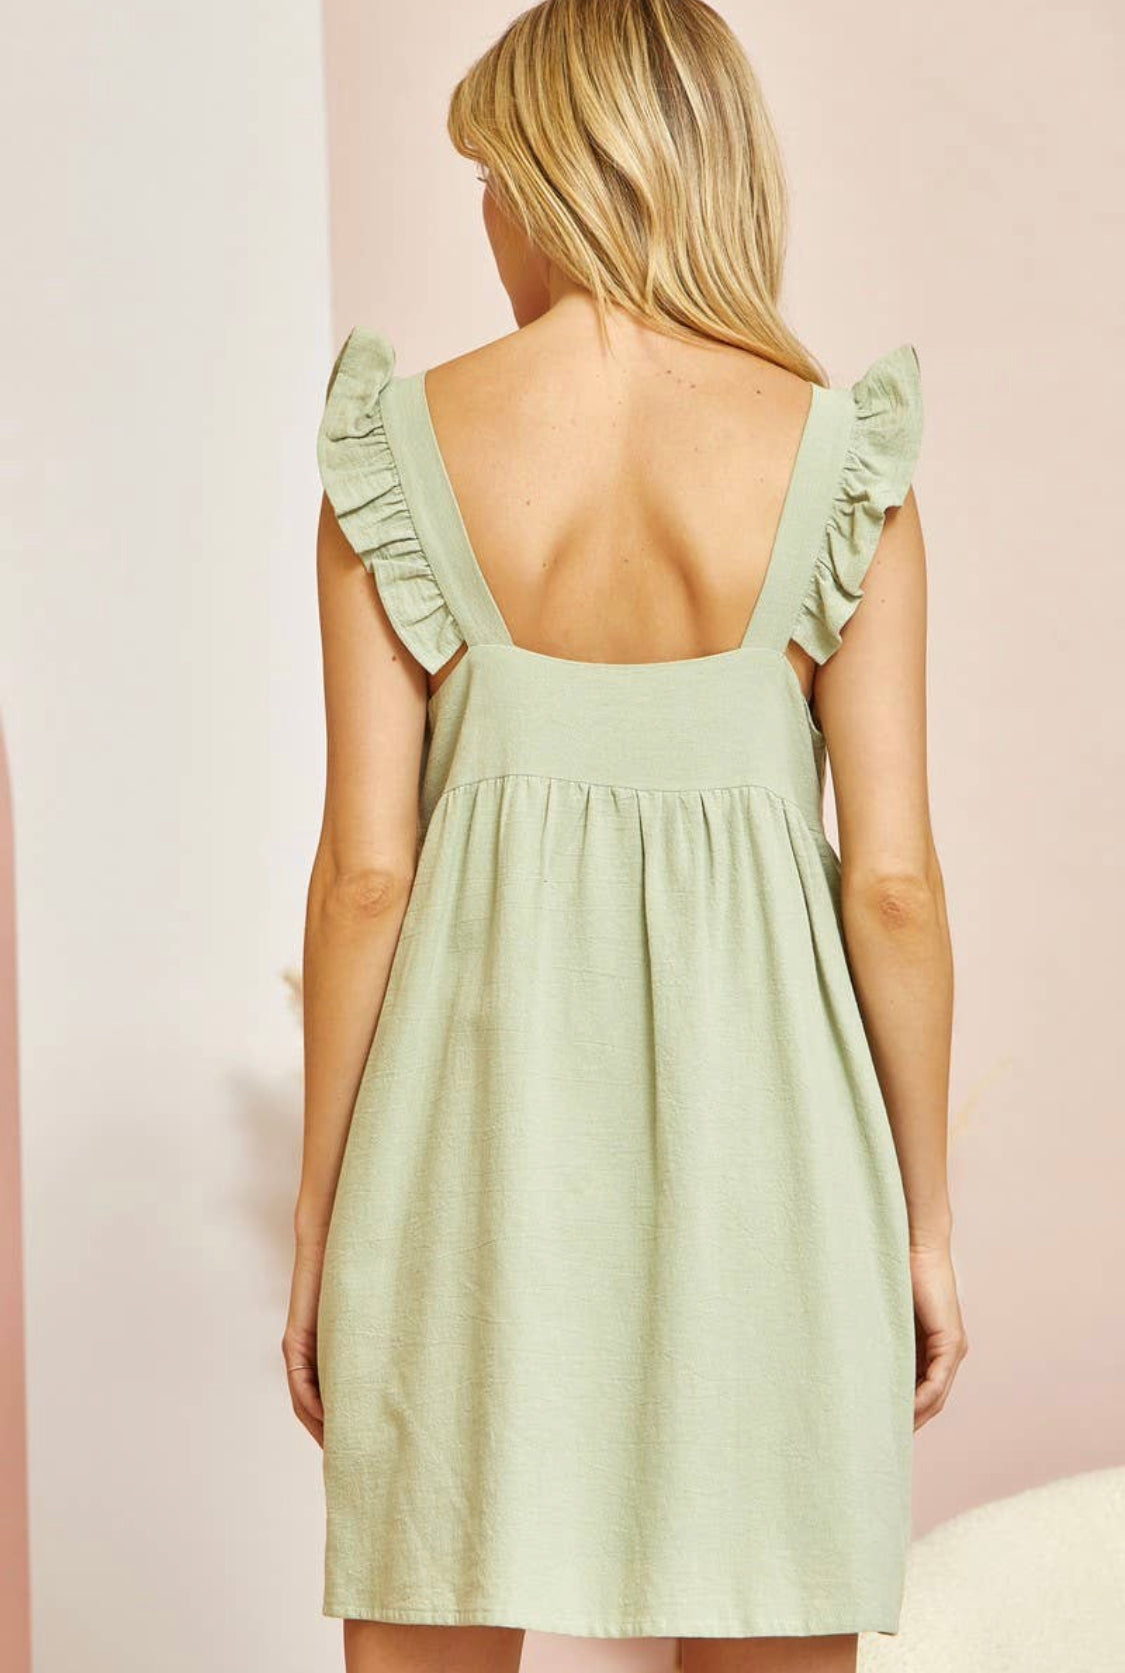 California Dreams Mint Green Flutter Sleeve Babydoll Dress - M, XL, & 2X